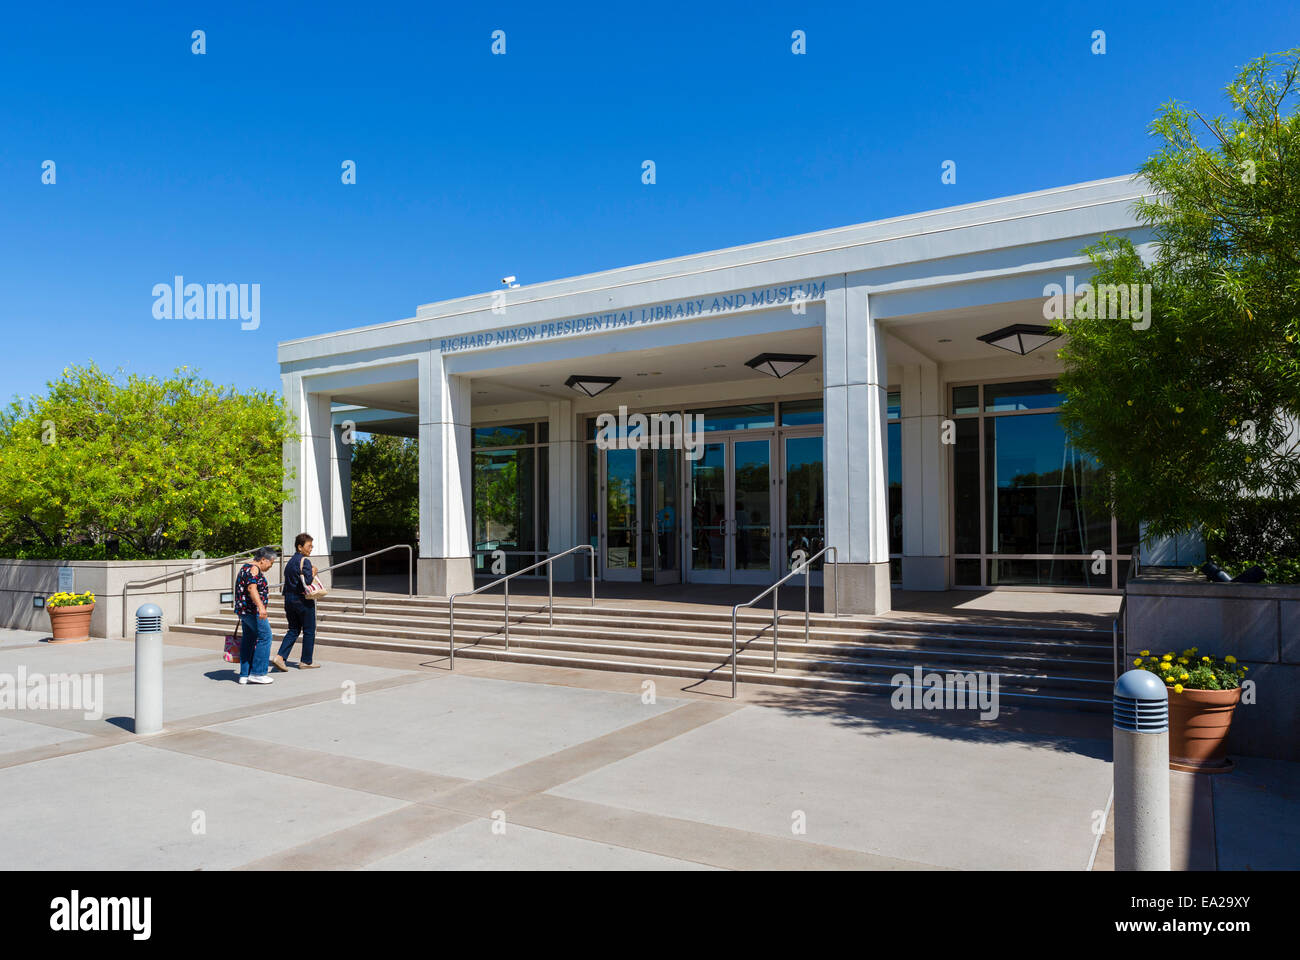 La Richard Nixon Presidential Library and Museum, Yorba Linda, Orange County, près de Los Angeles, Californie, USA Banque D'Images